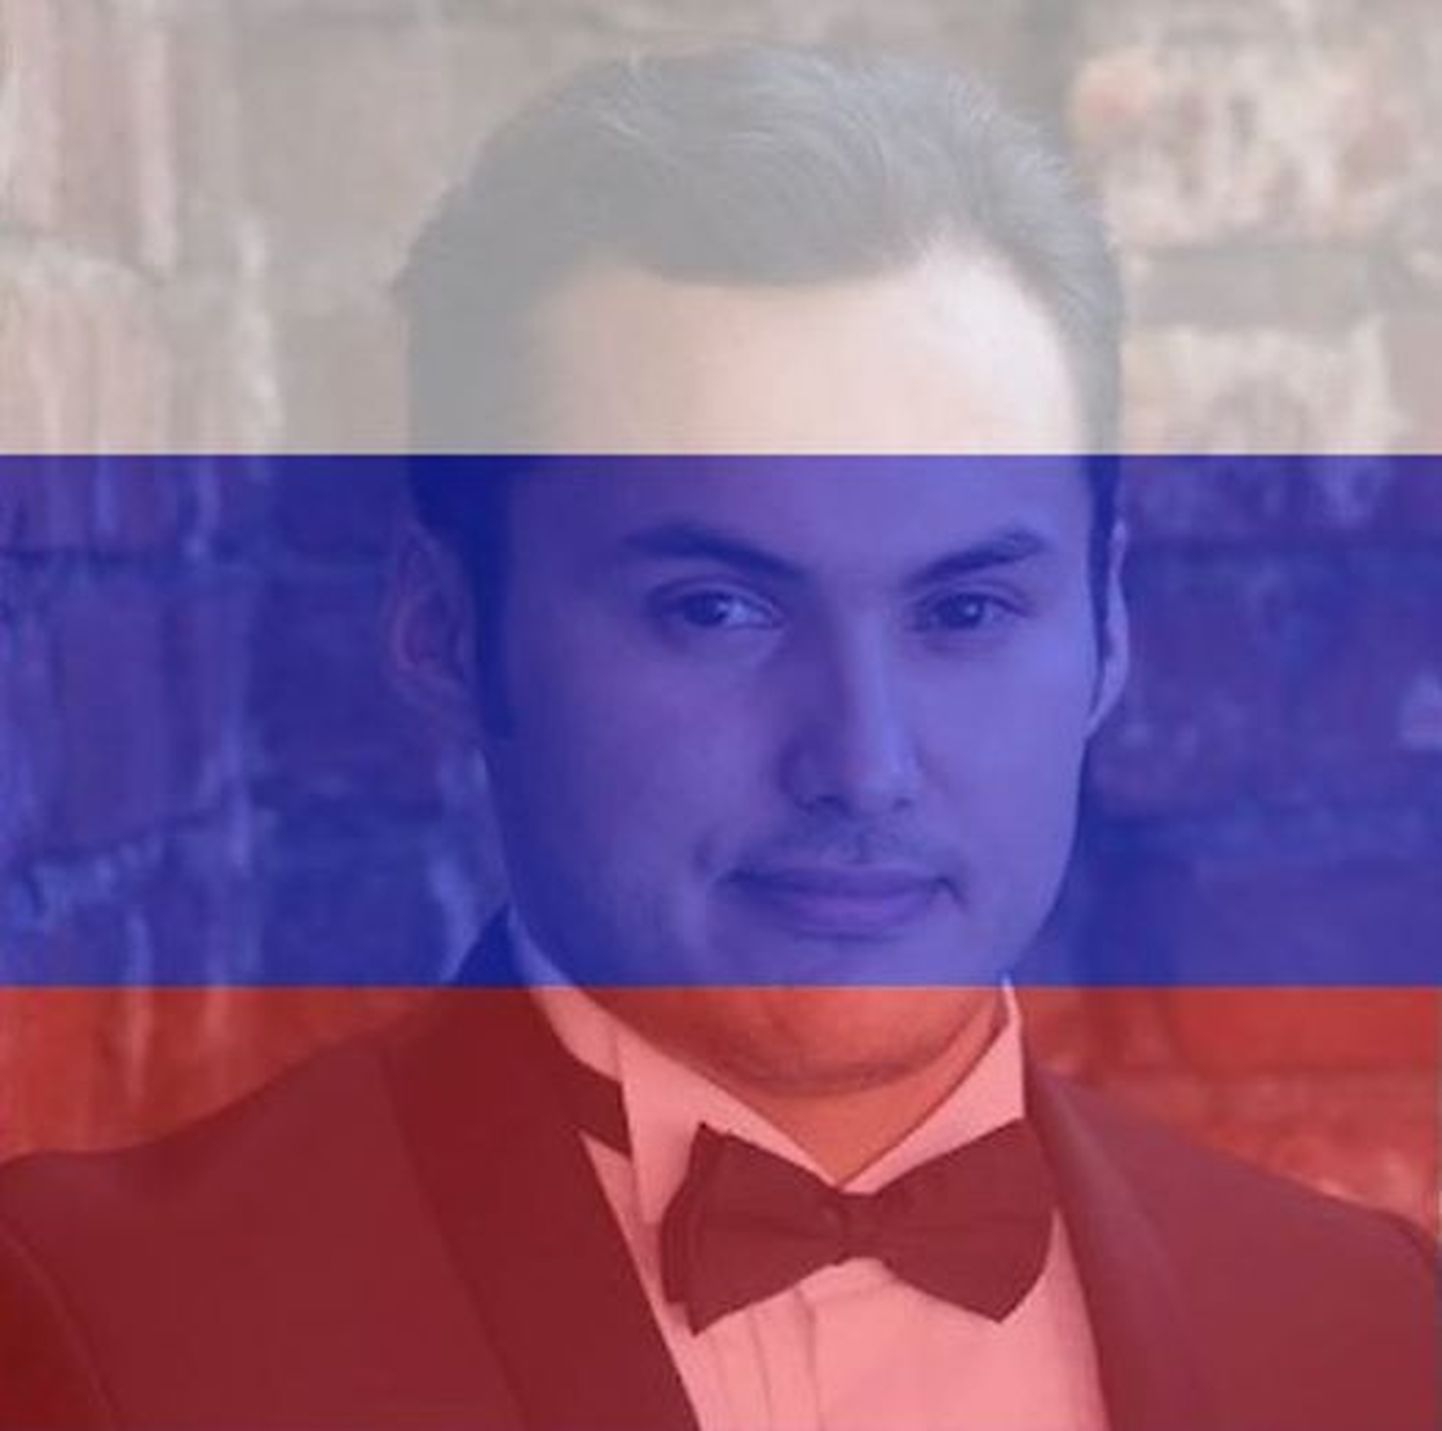 #Pridetoberussian